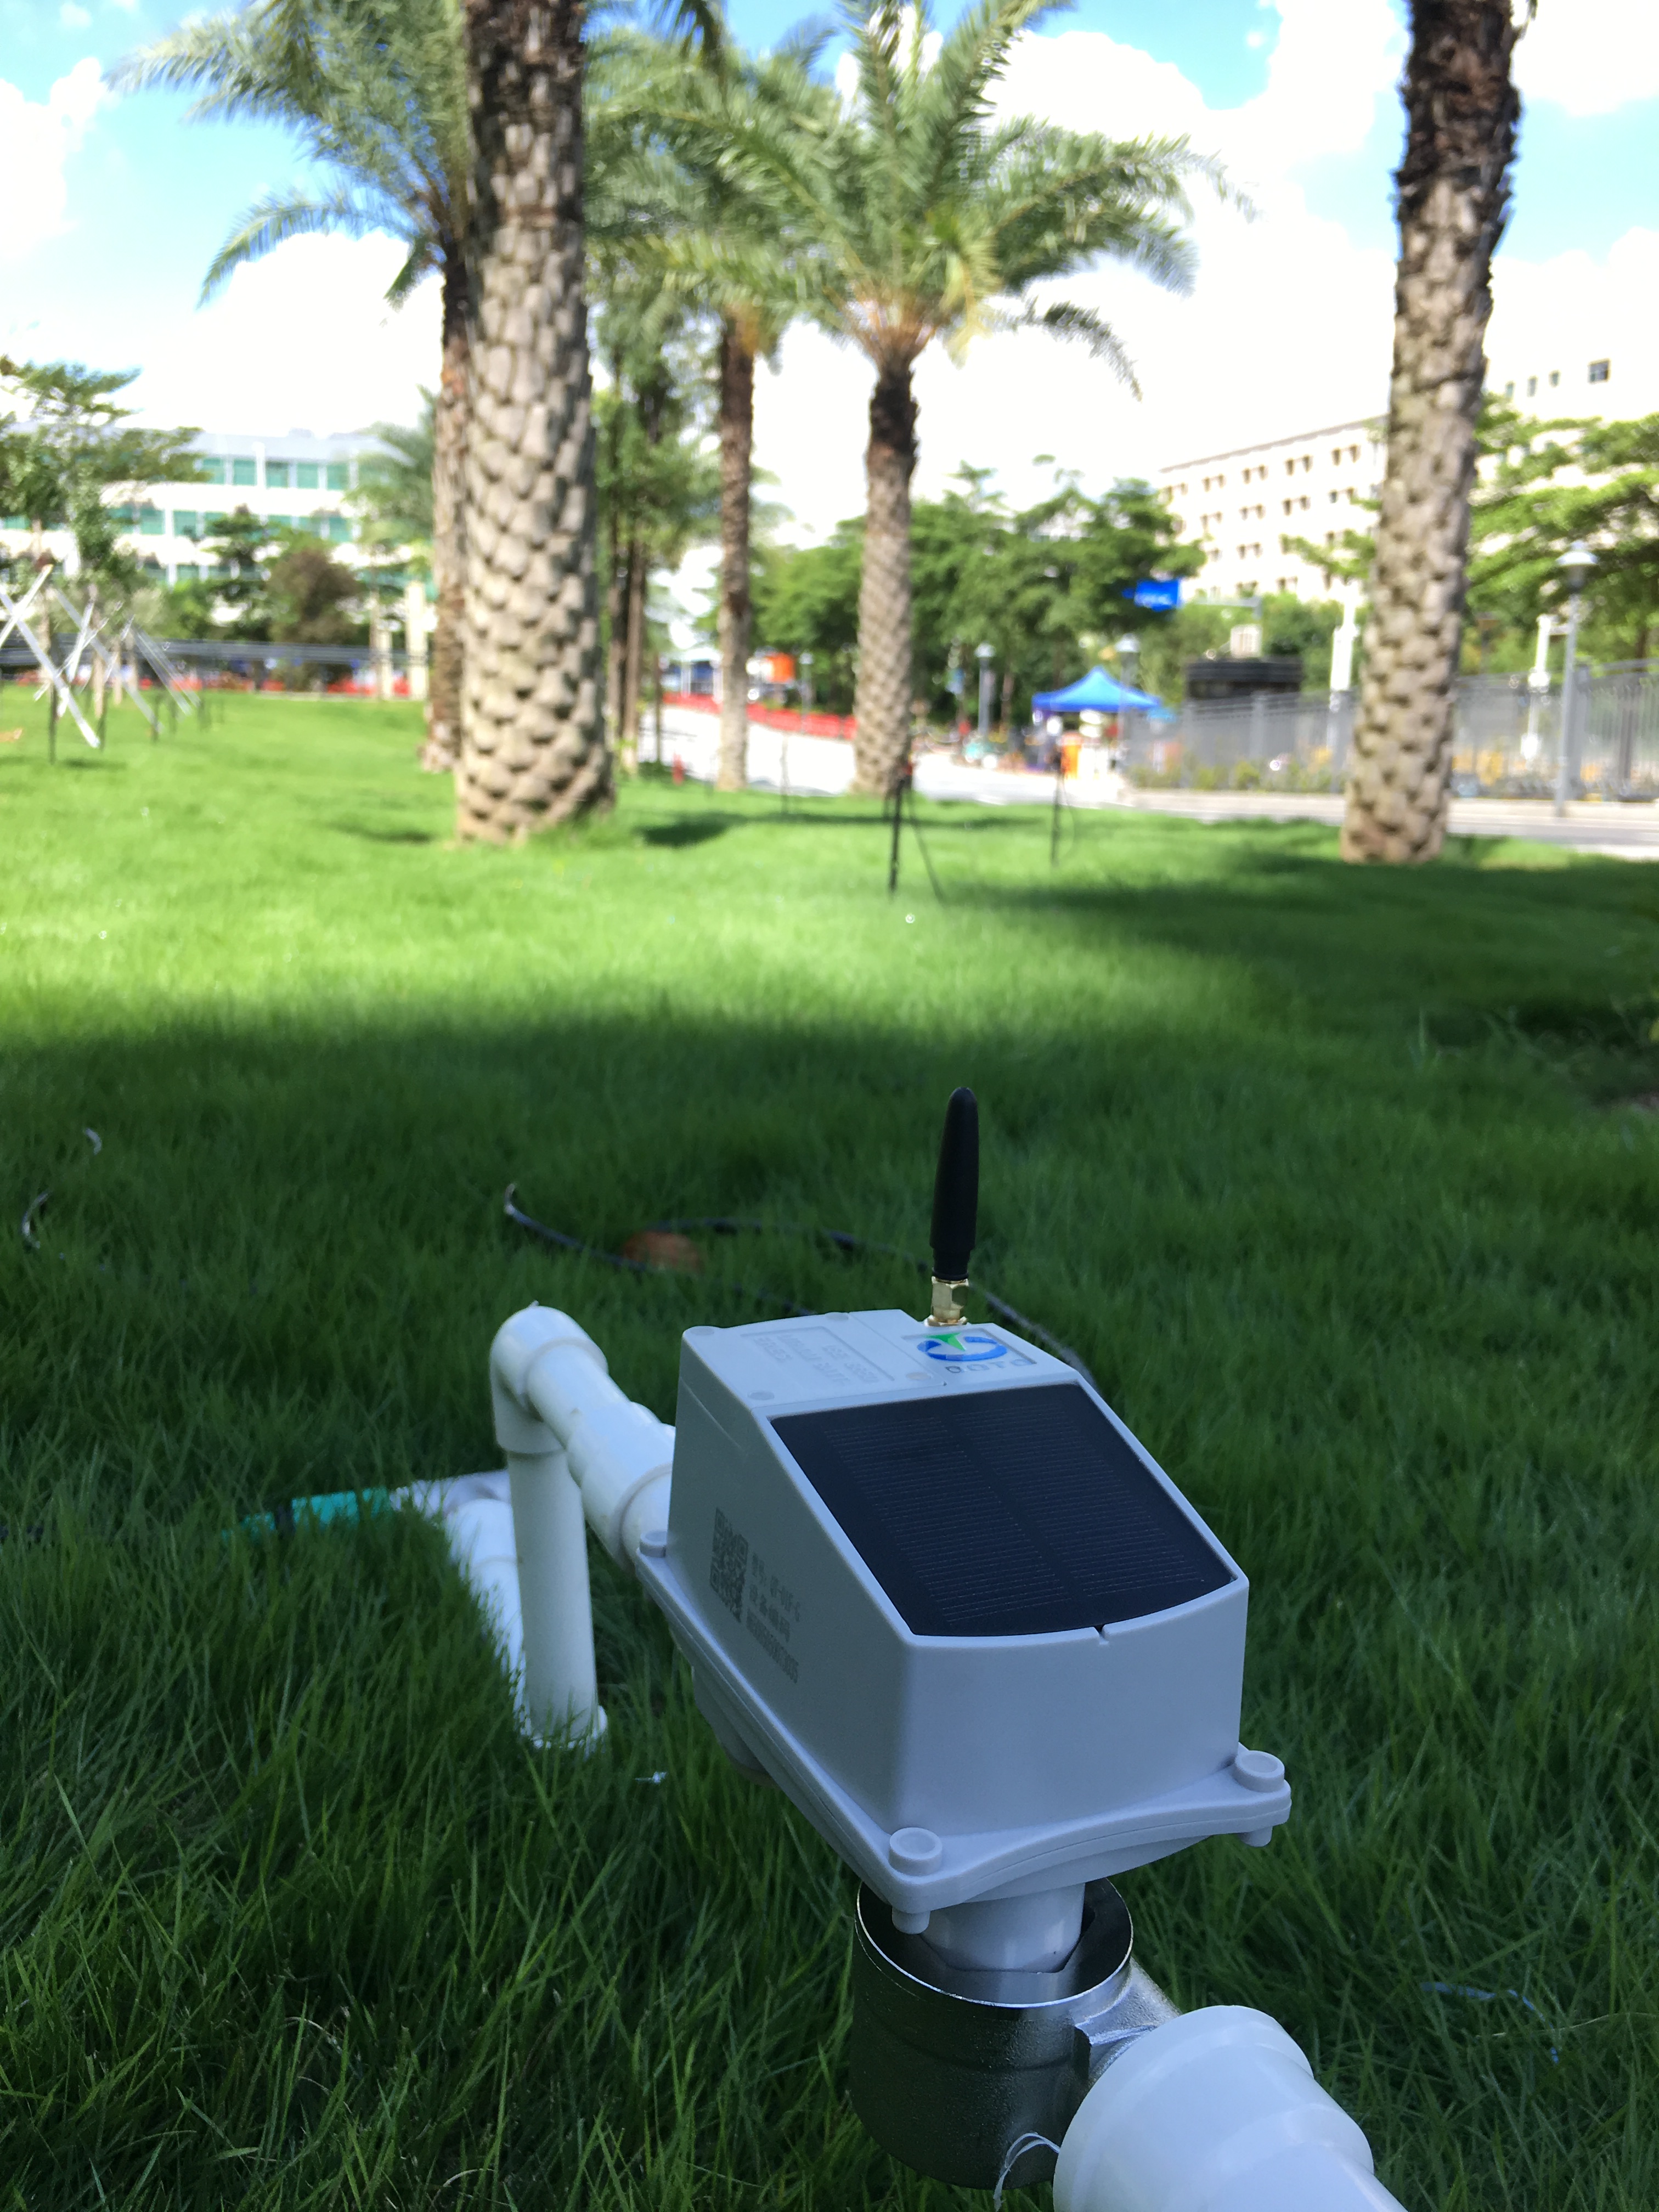 Temporizador de manguera de jardín inteligente controlado por GSM con servicios IoT totalmente administrados